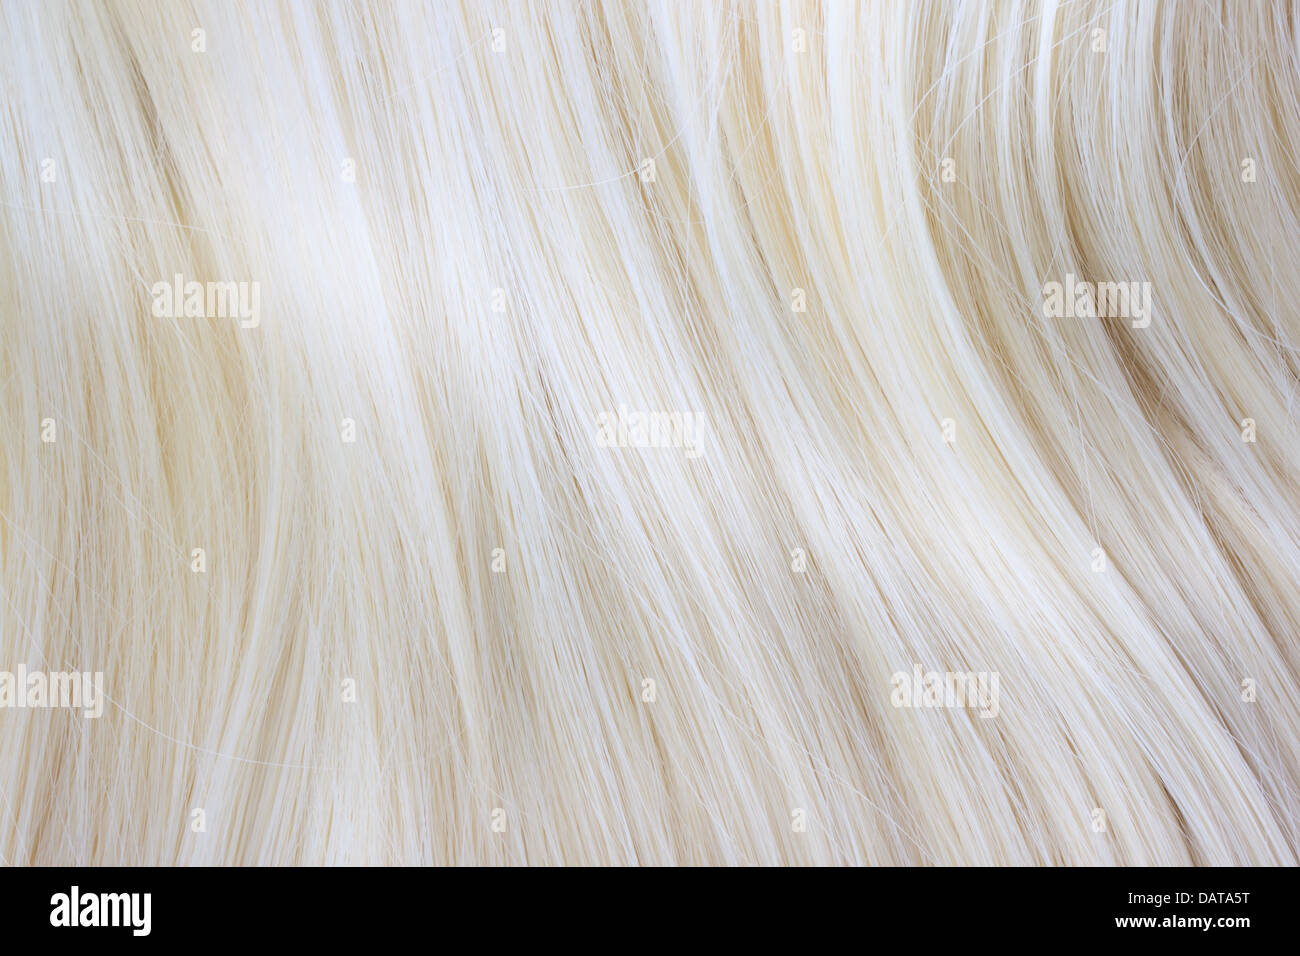 Gesunden blondes Haar - Nahaufnahme Bild Stockfoto